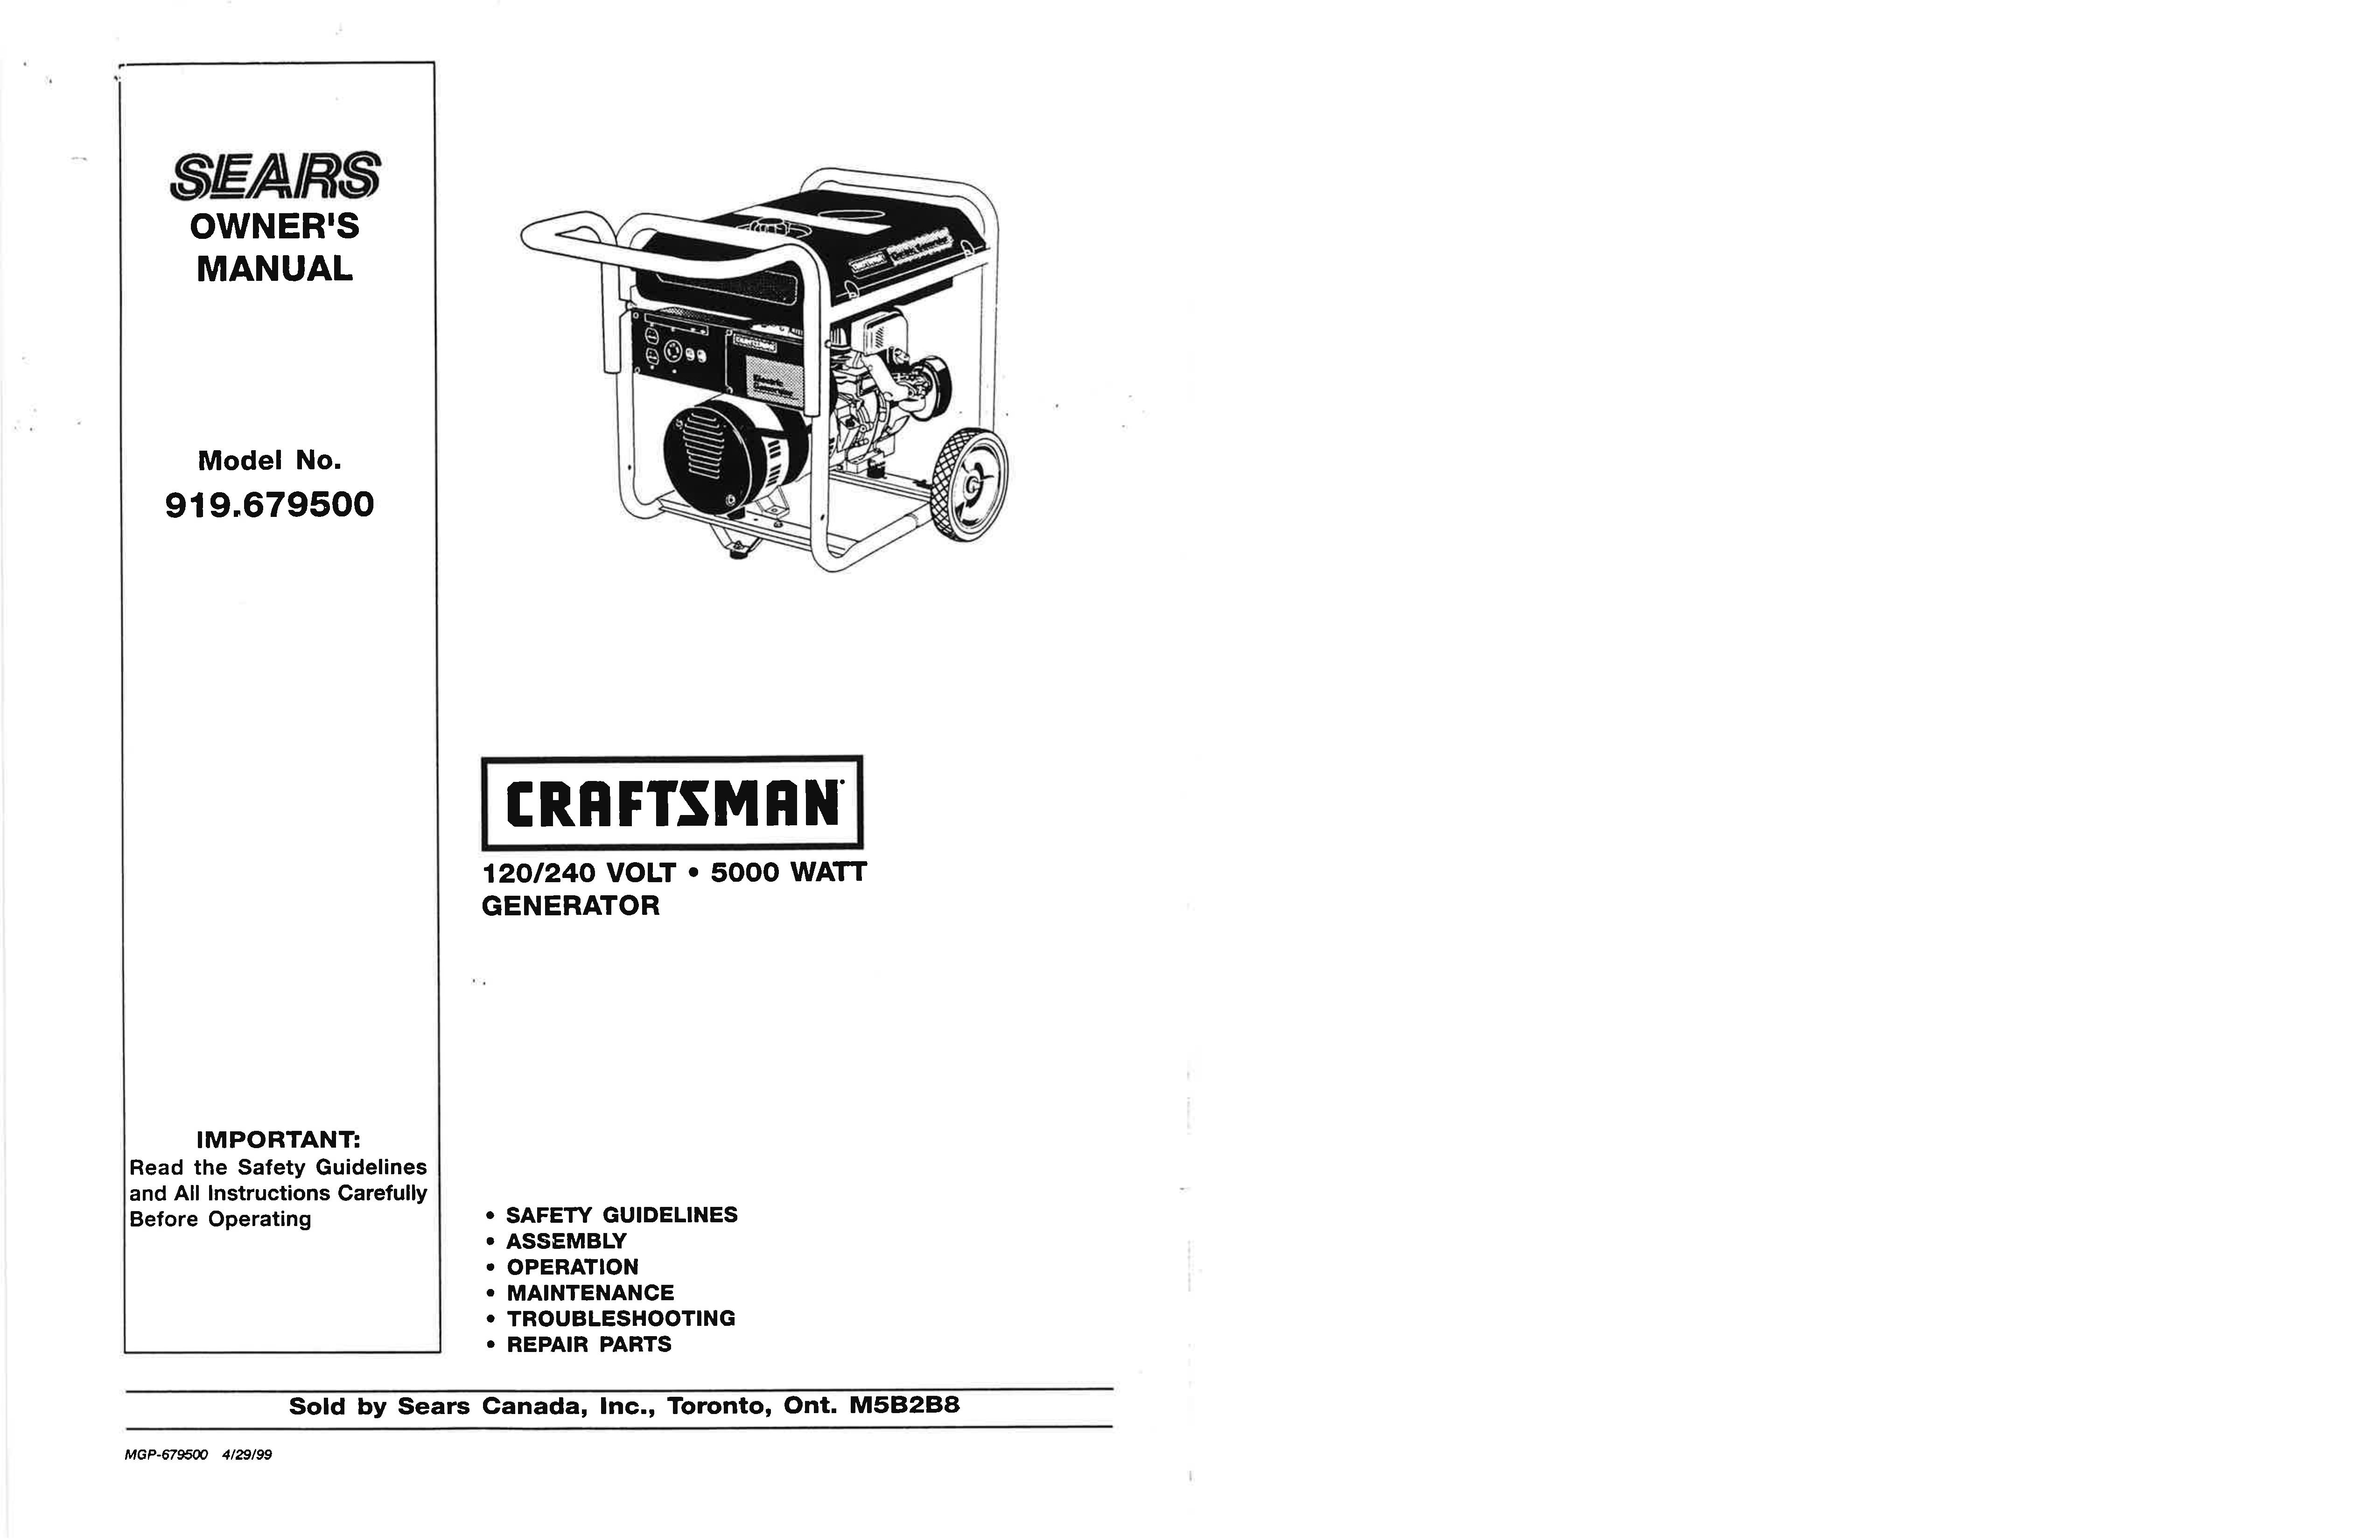 Craftsman 919.679500 Portable Generator User Manual